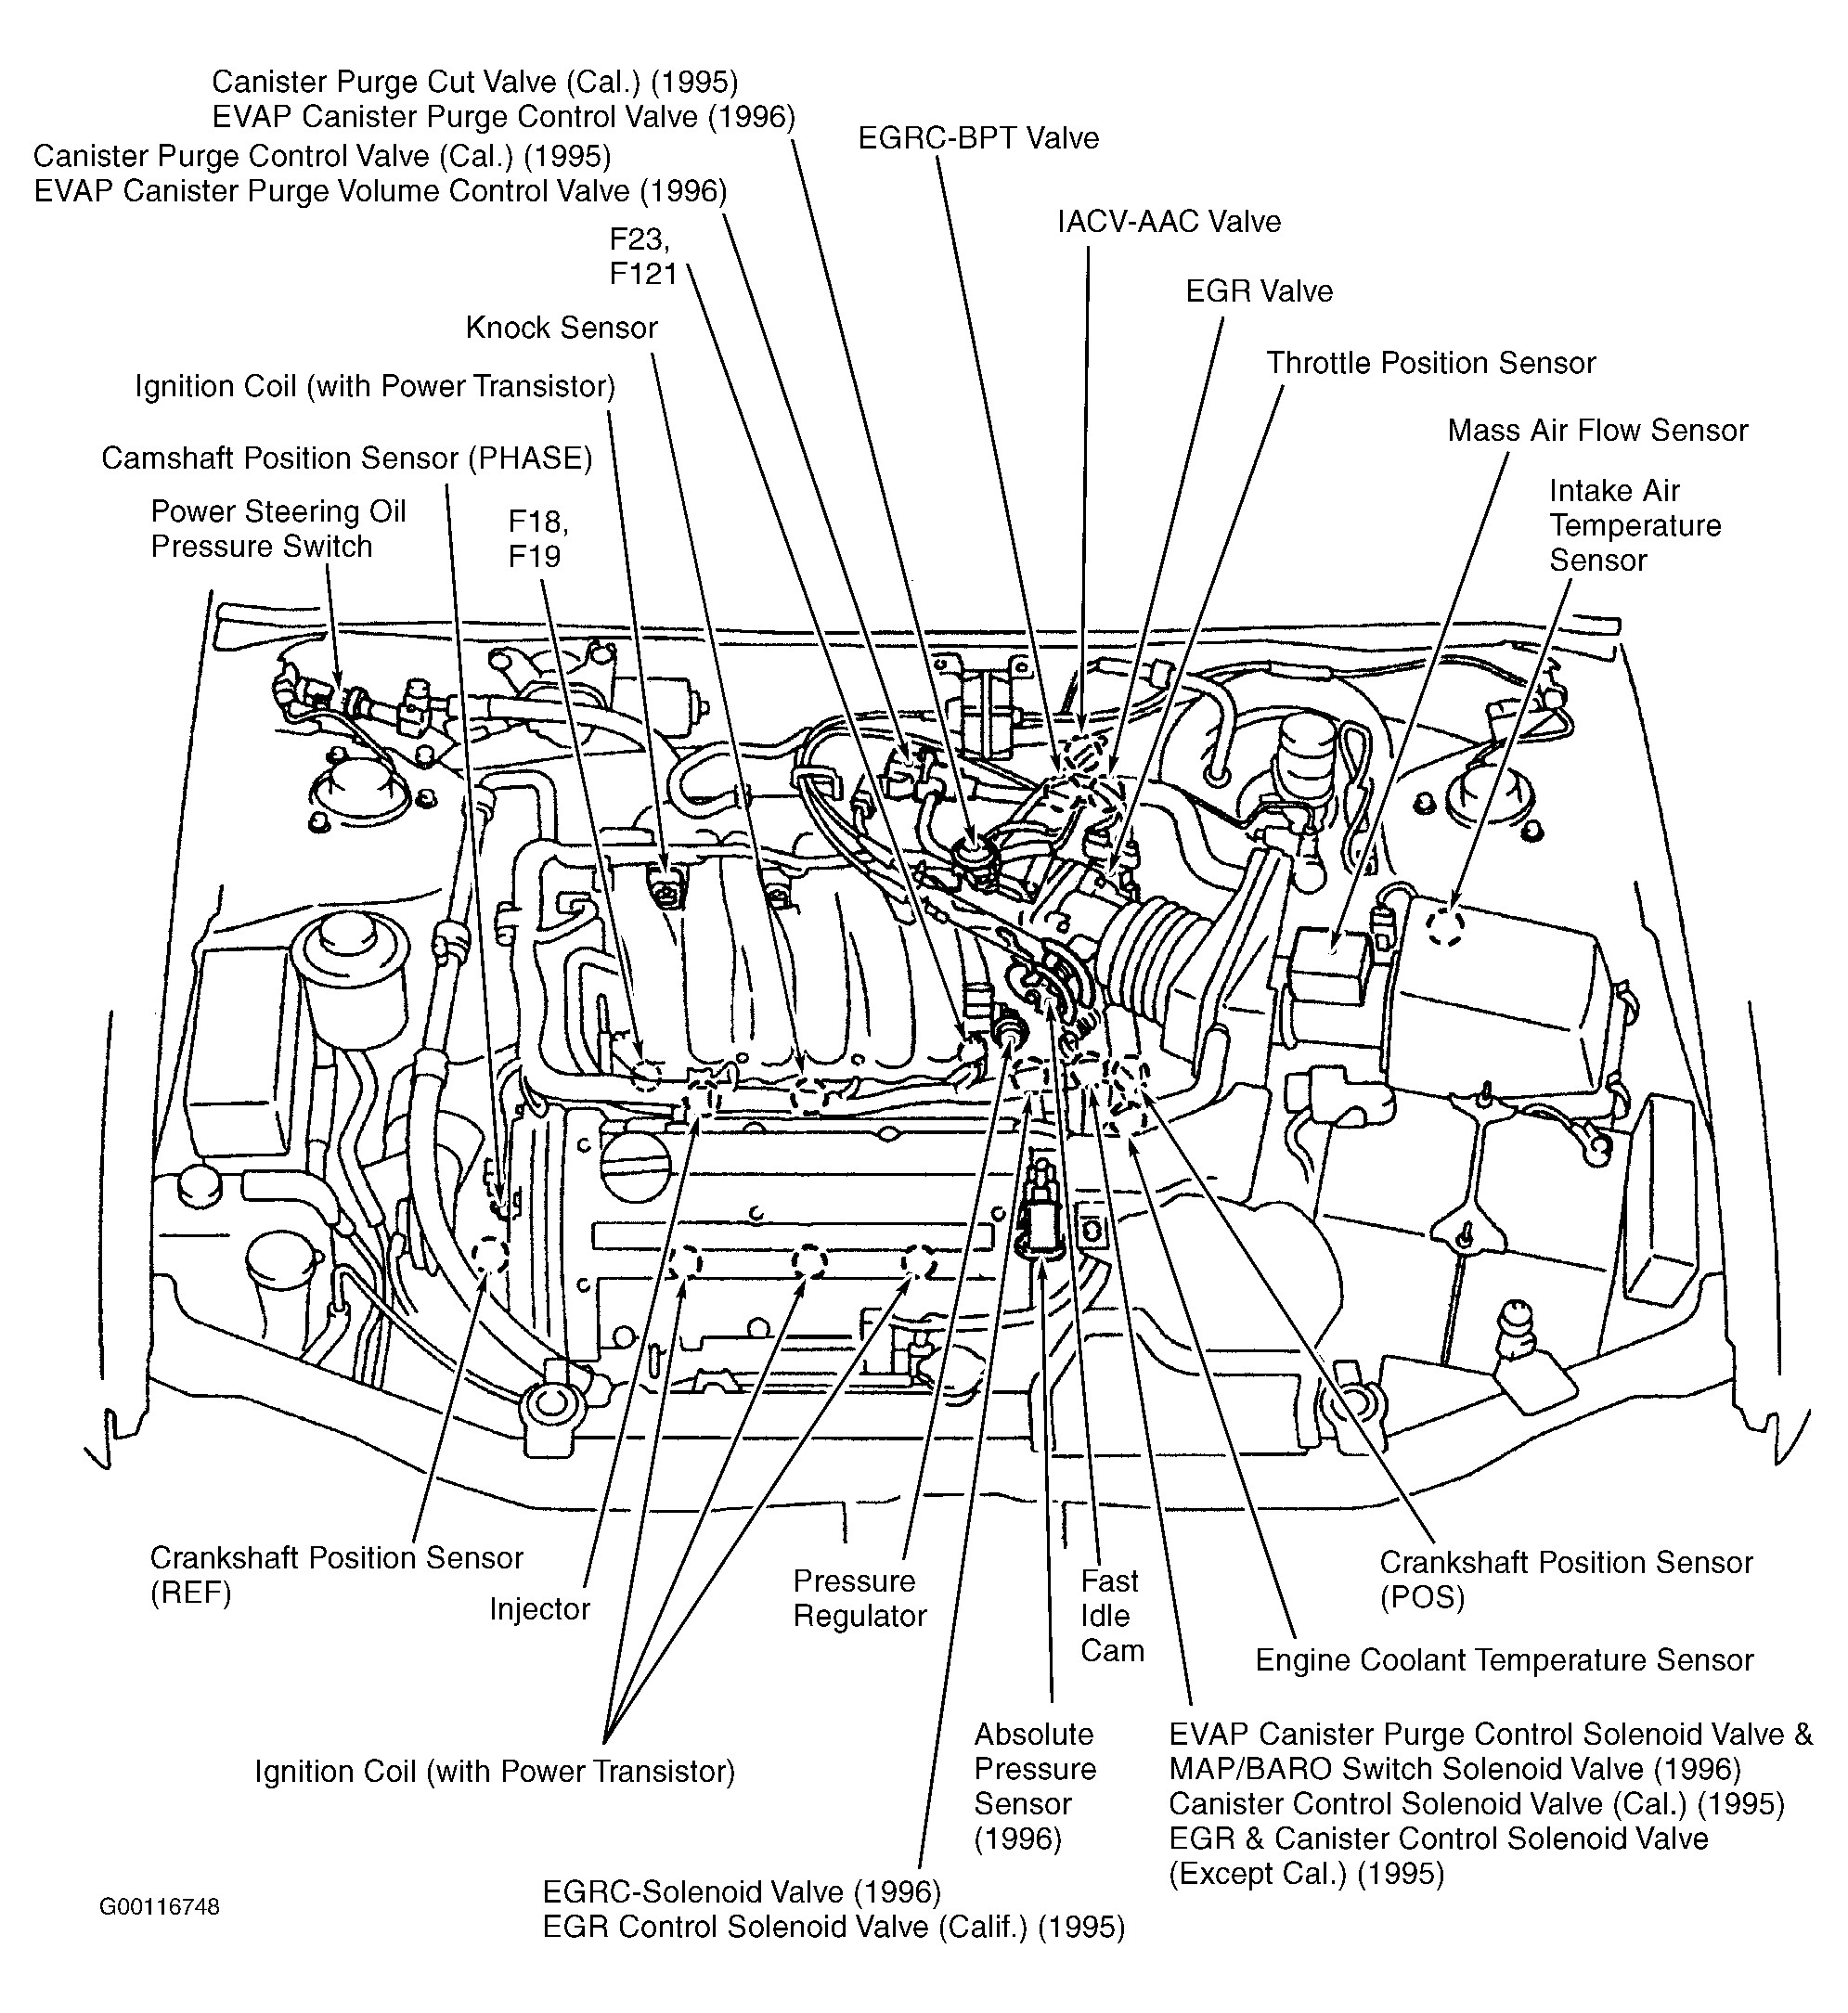 2010 Nissan Altima Engine Diagram 1995nissanmaximaenginediagram Question About California Evap Of 2010 Nissan Altima Engine Diagram